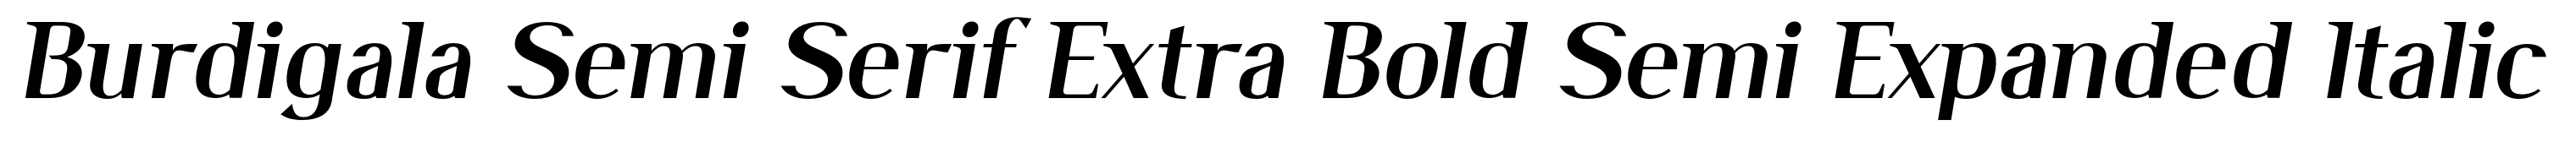 Burdigala Semi Serif Extra Bold Semi Expanded Italic